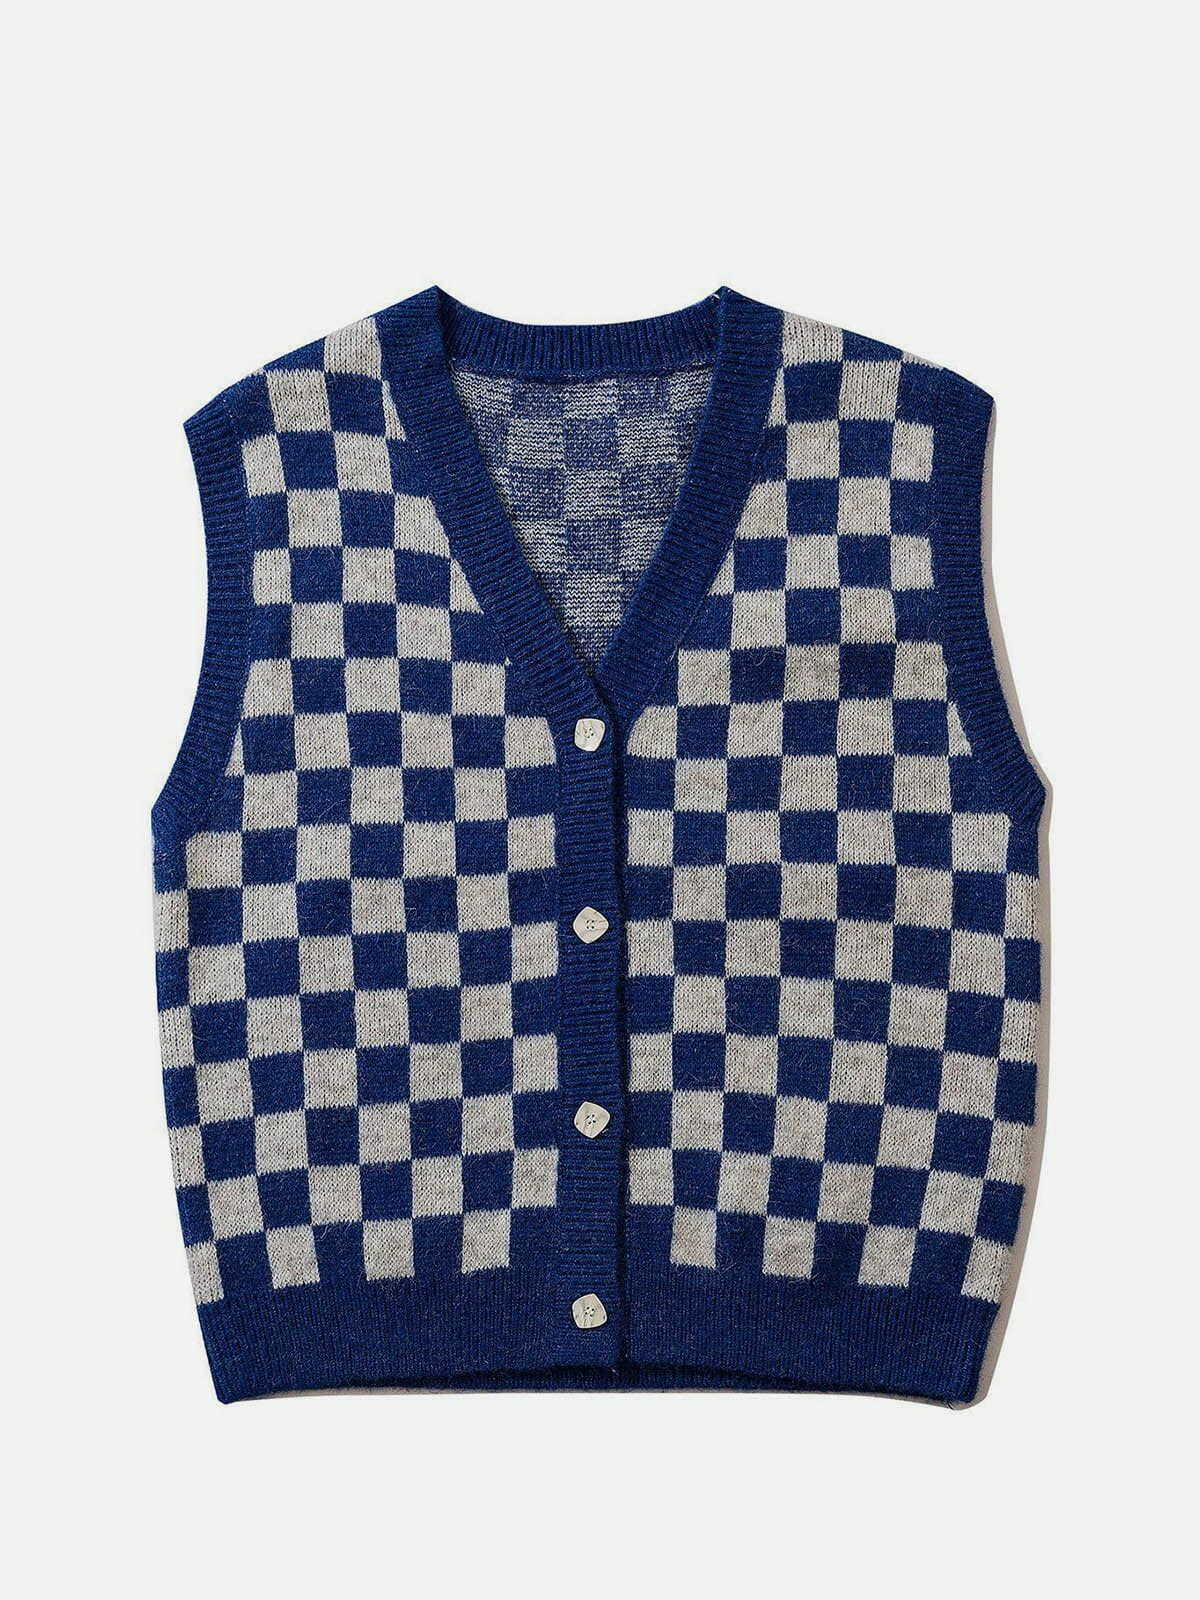 checkerboard knit sweater vest edgy streetwear essential 7811